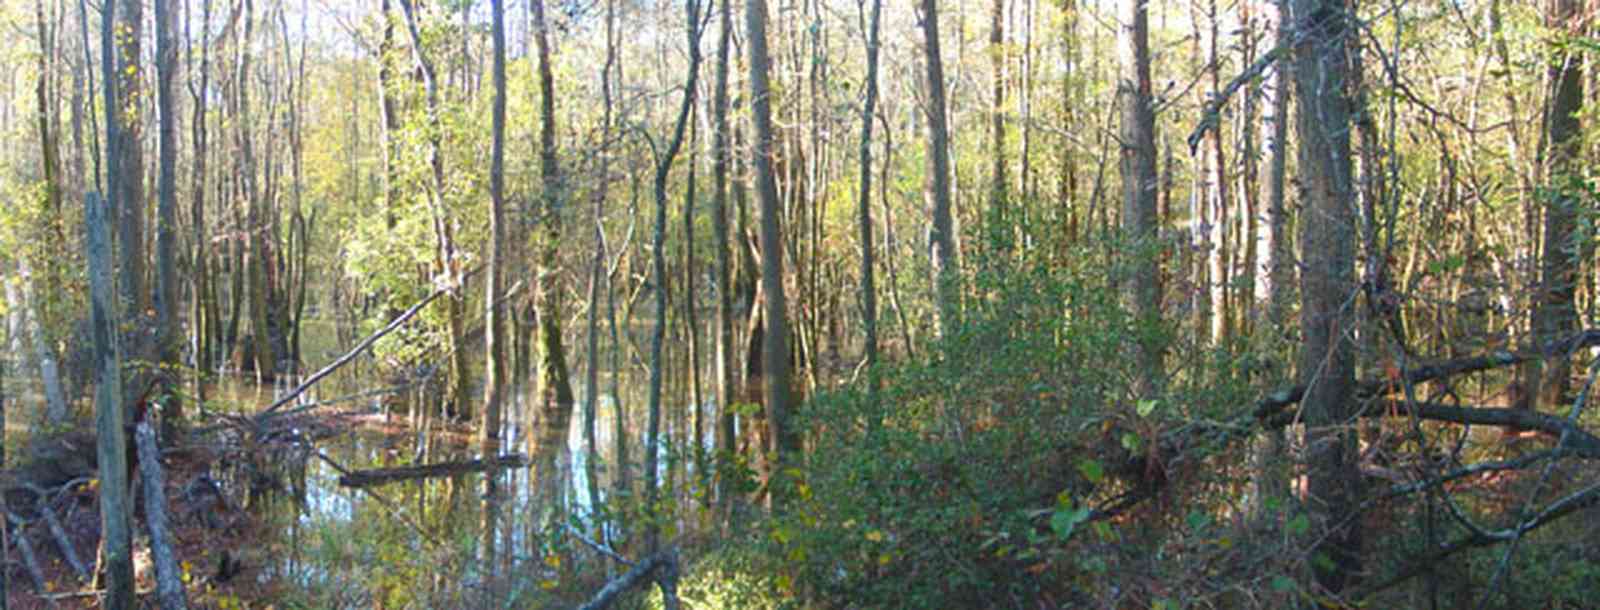 Perdido-Key:-Riverwalk_05.jpg:  swamp, boardwalk, cypress trees, bog